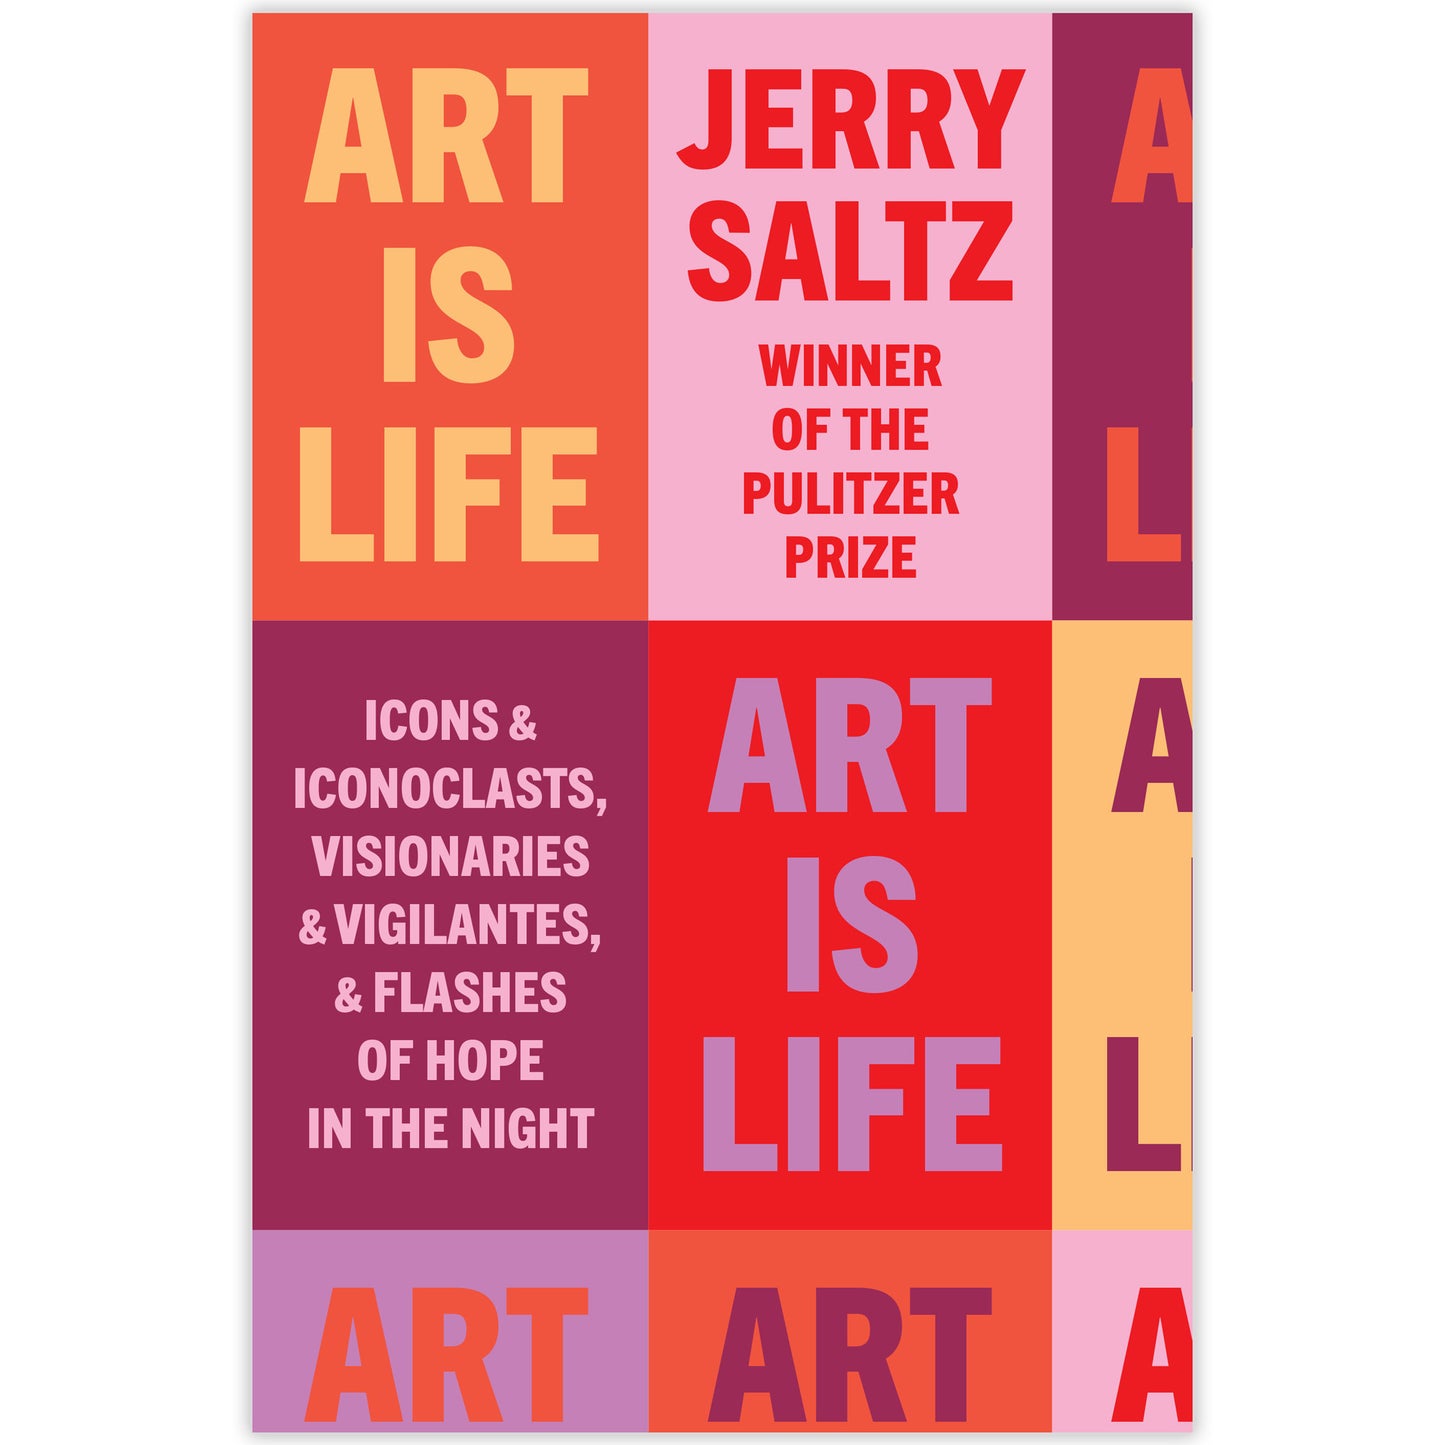 El arte es vida, de Jerry Saltz